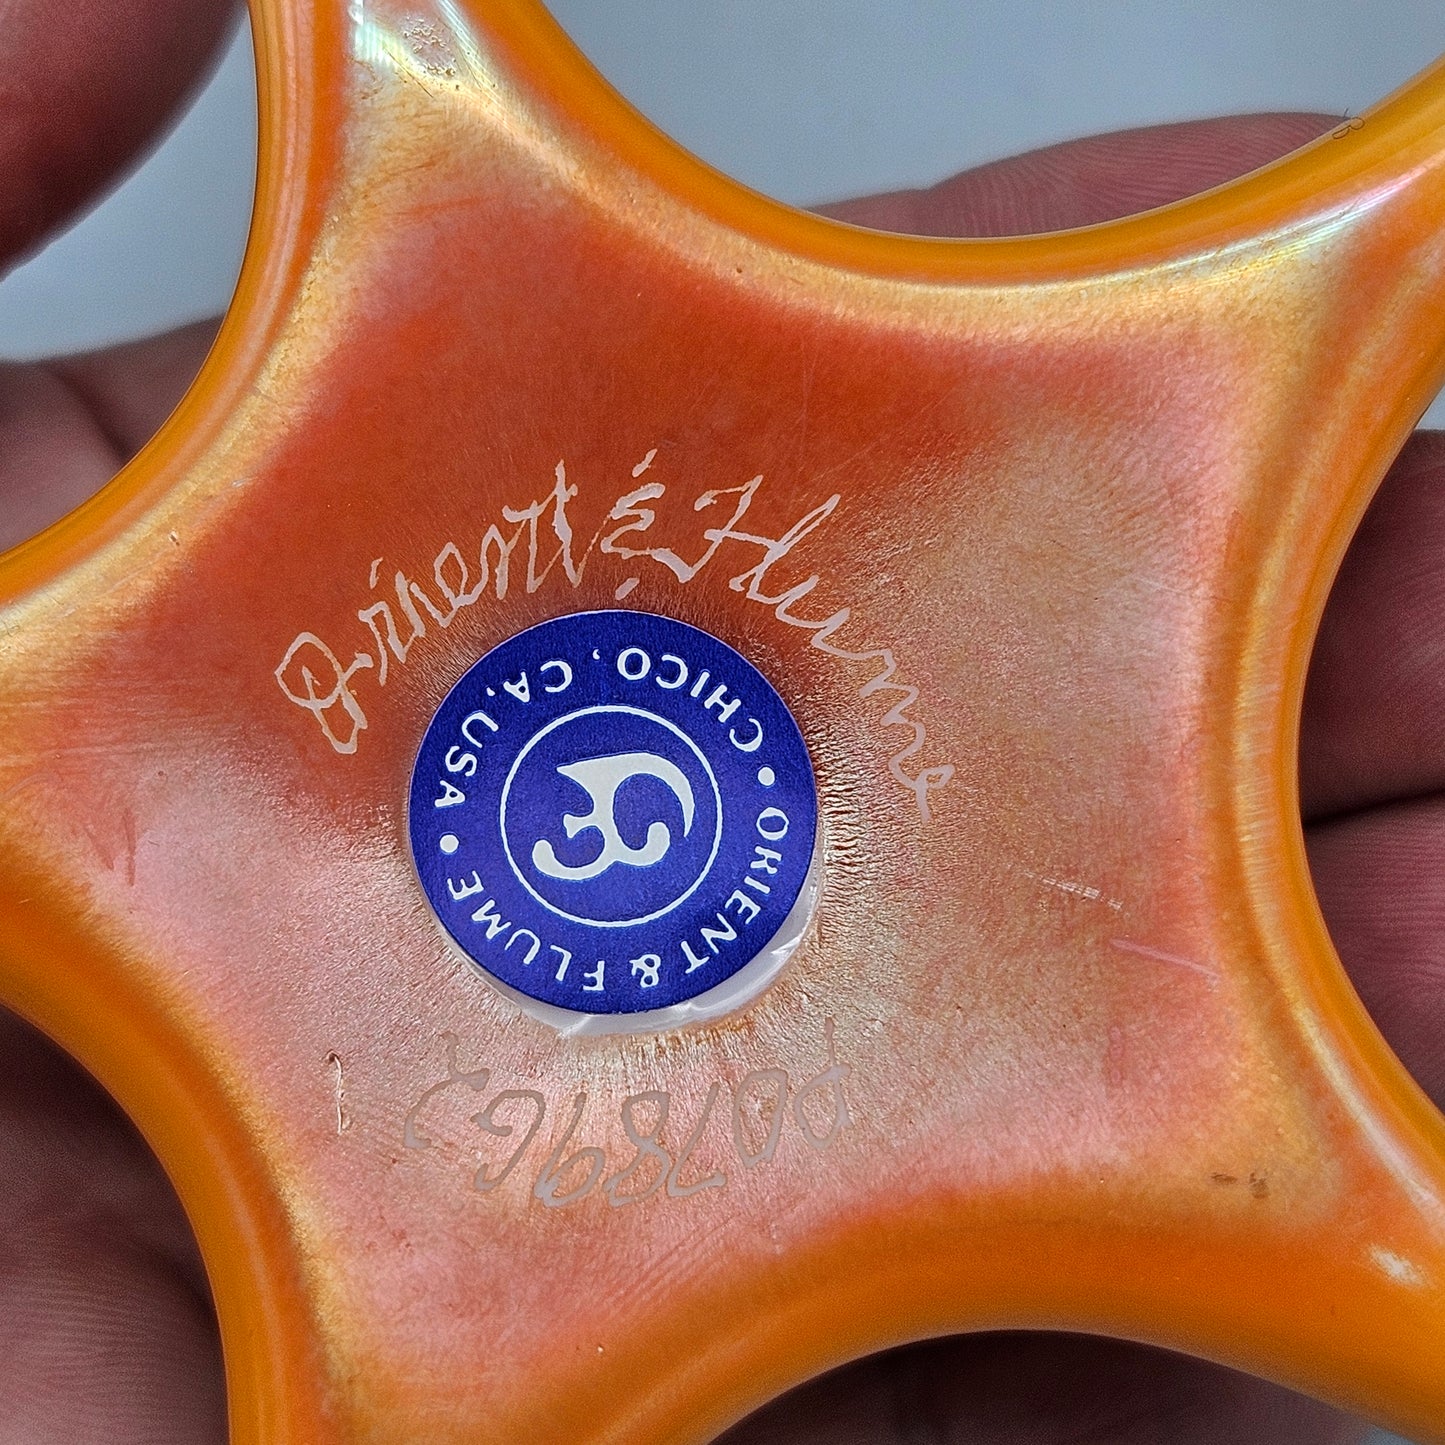 Orient & Flume Art Glass Orange Starfish